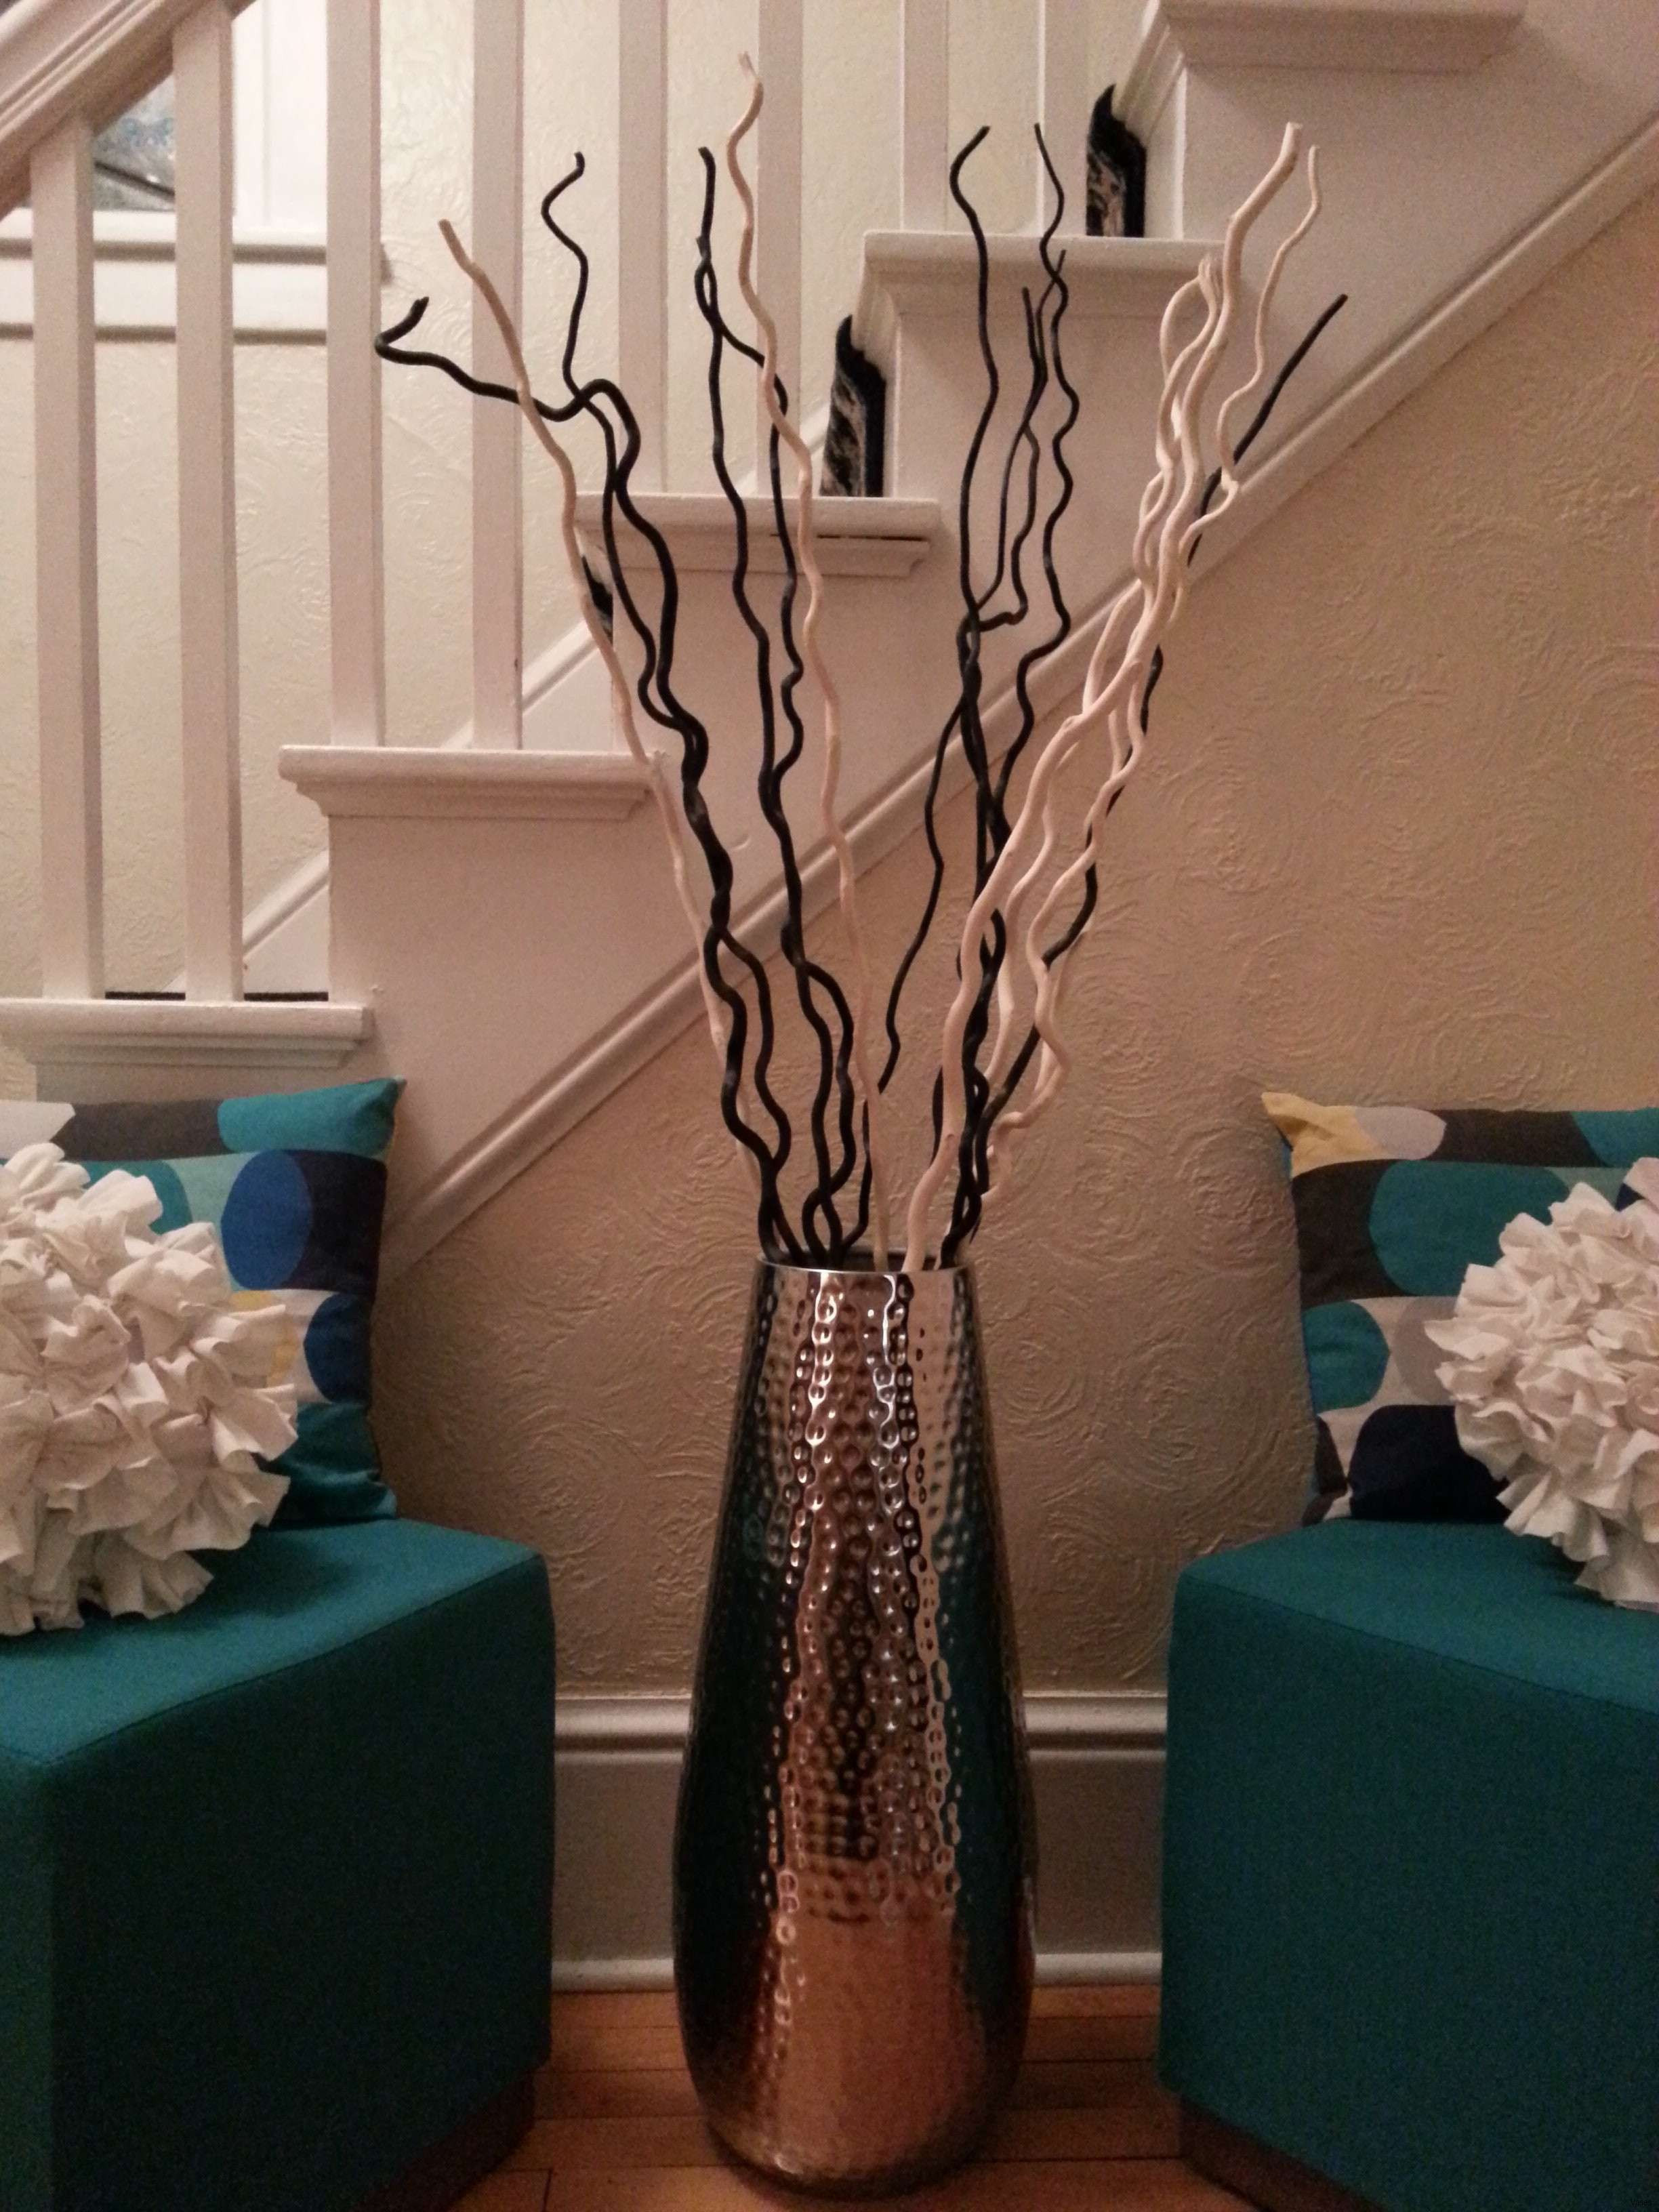 21 Amazing Tall Floor Vase with Branches | Decorative vase Ideas